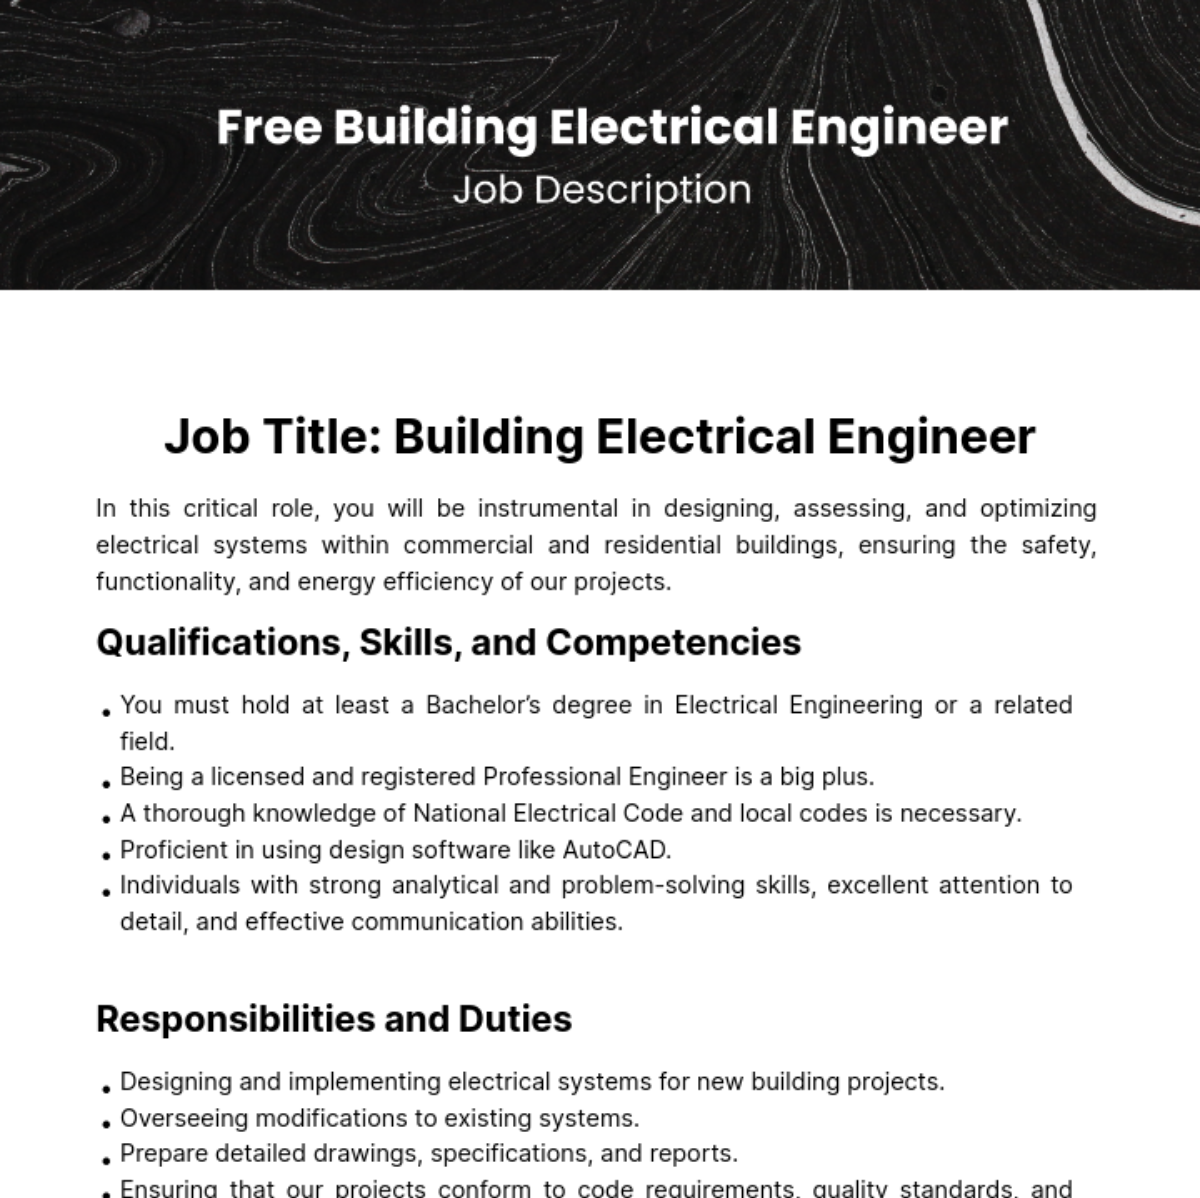 Free Building Electrical Engineer Job Description Template